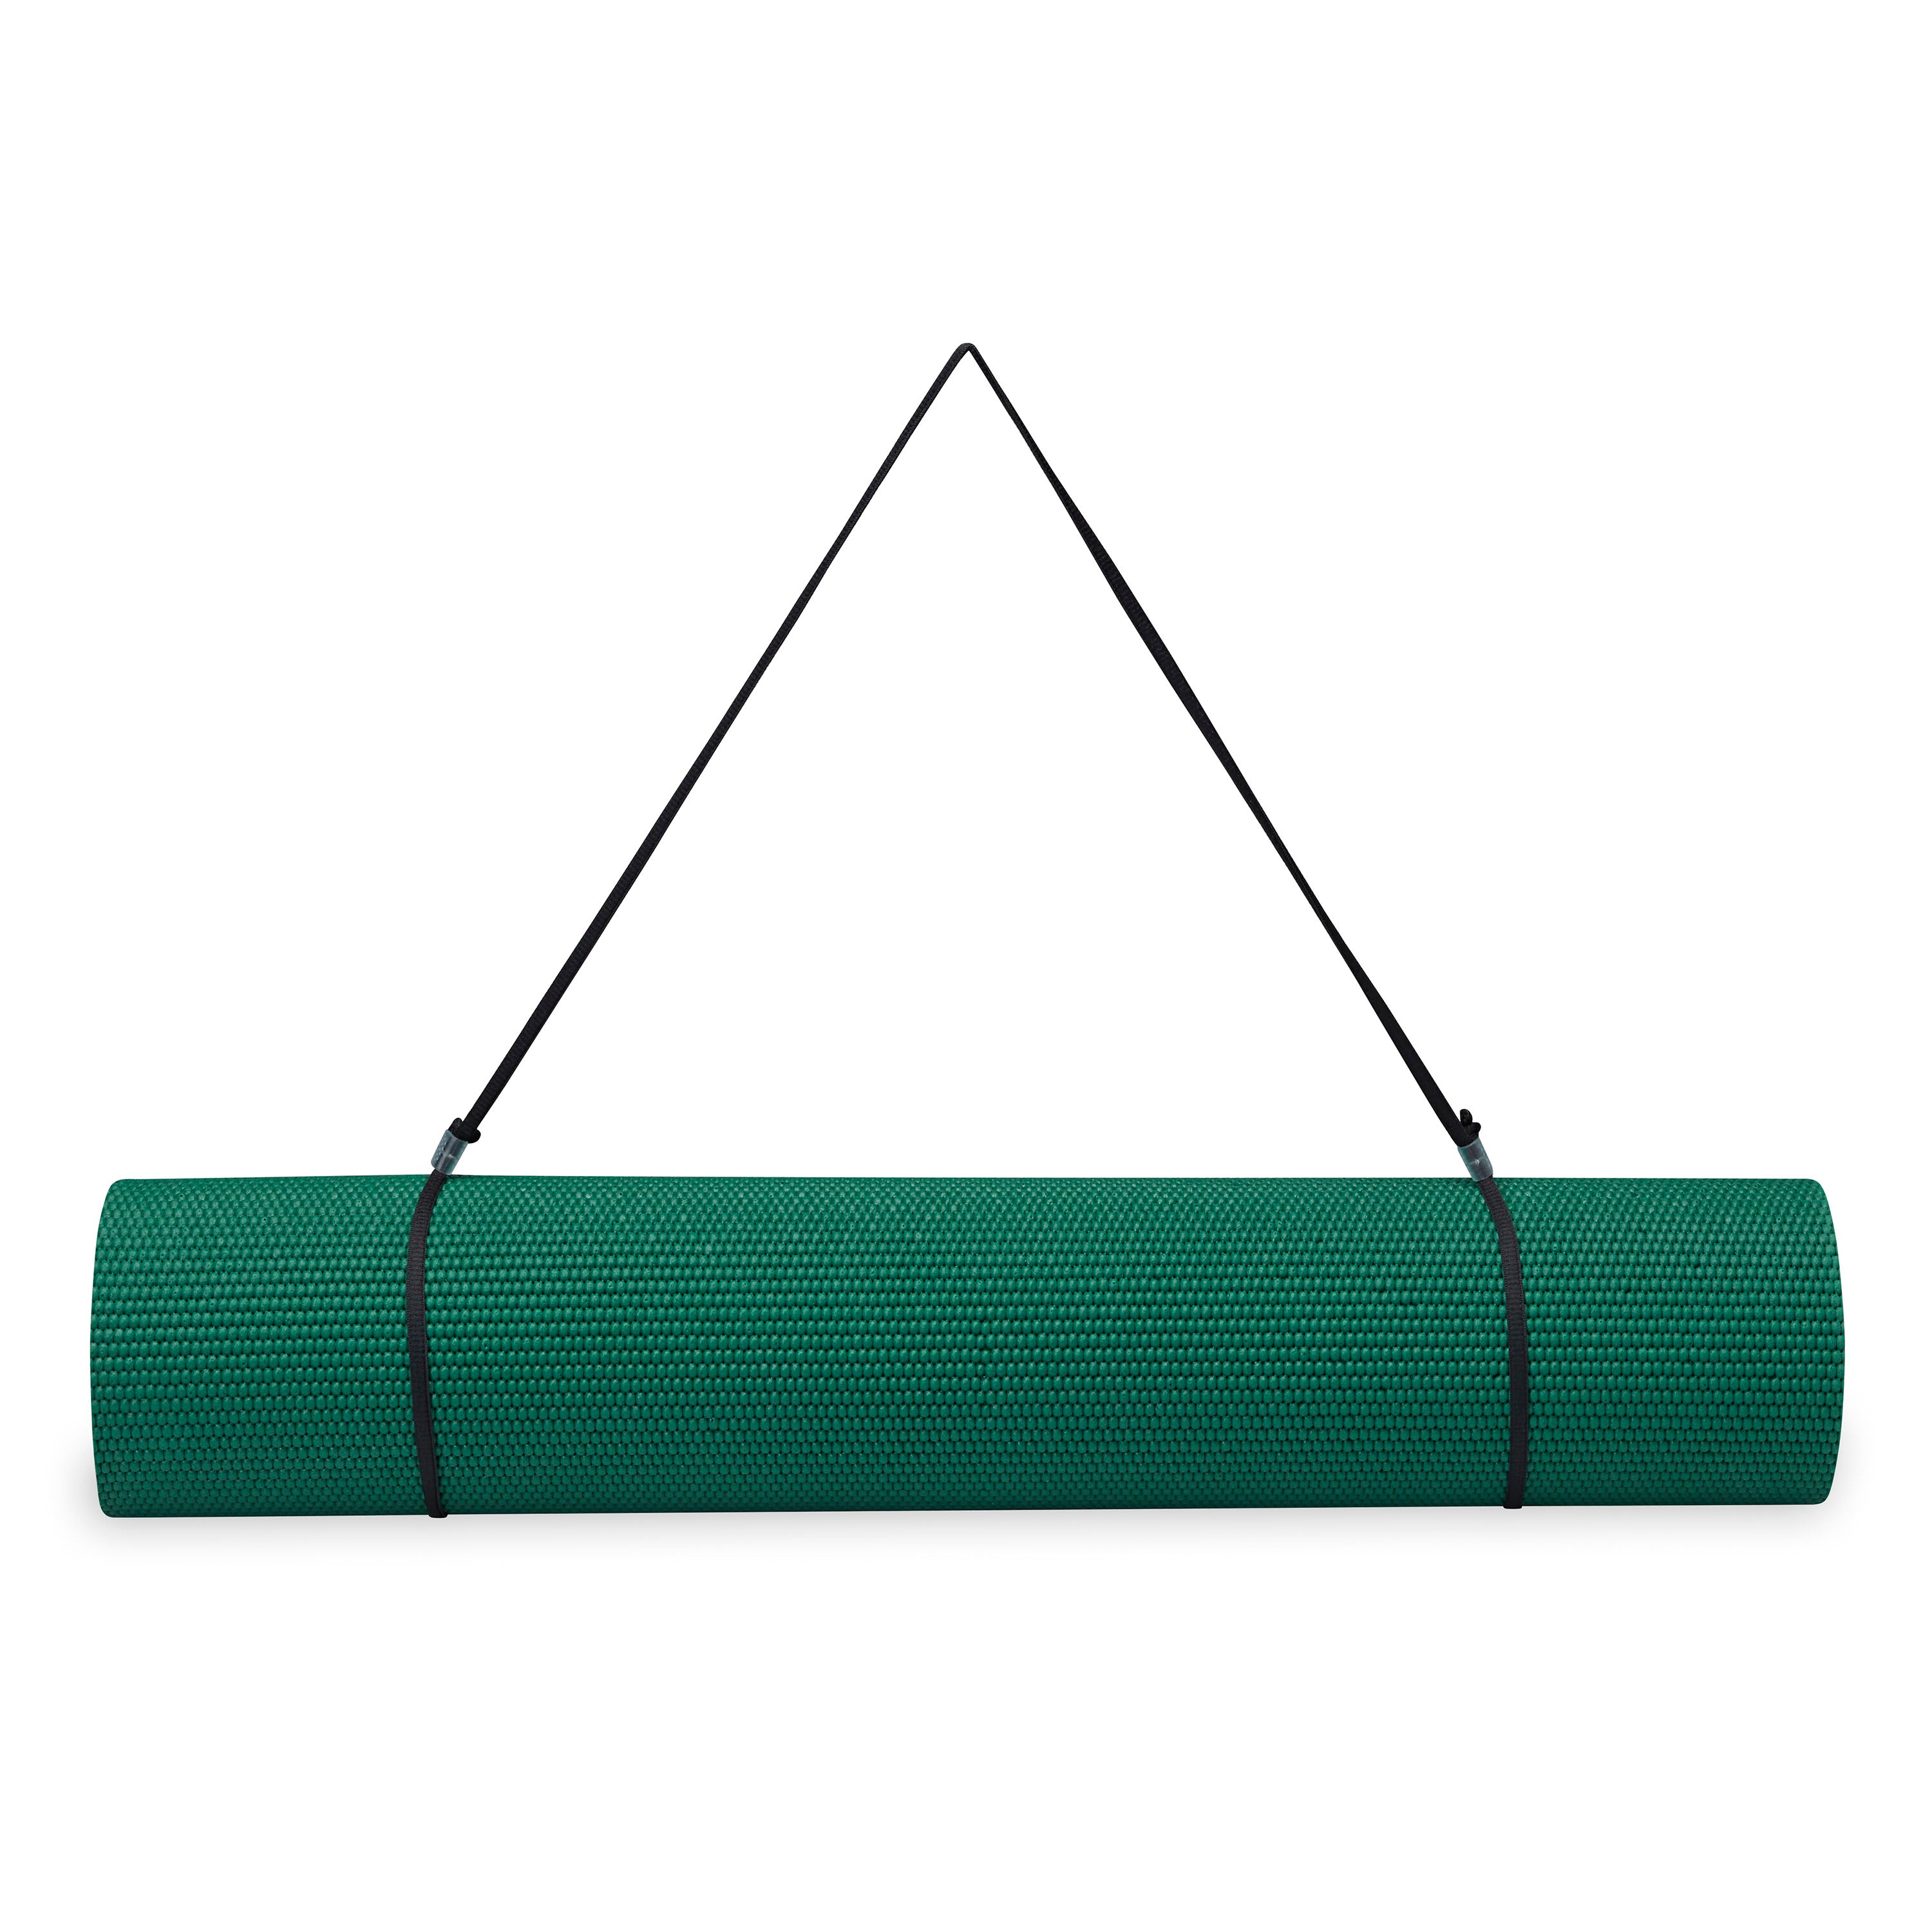 GetUSCart- Gaiam Essentials Thick Yoga Mat Fitness & Exercise Mat